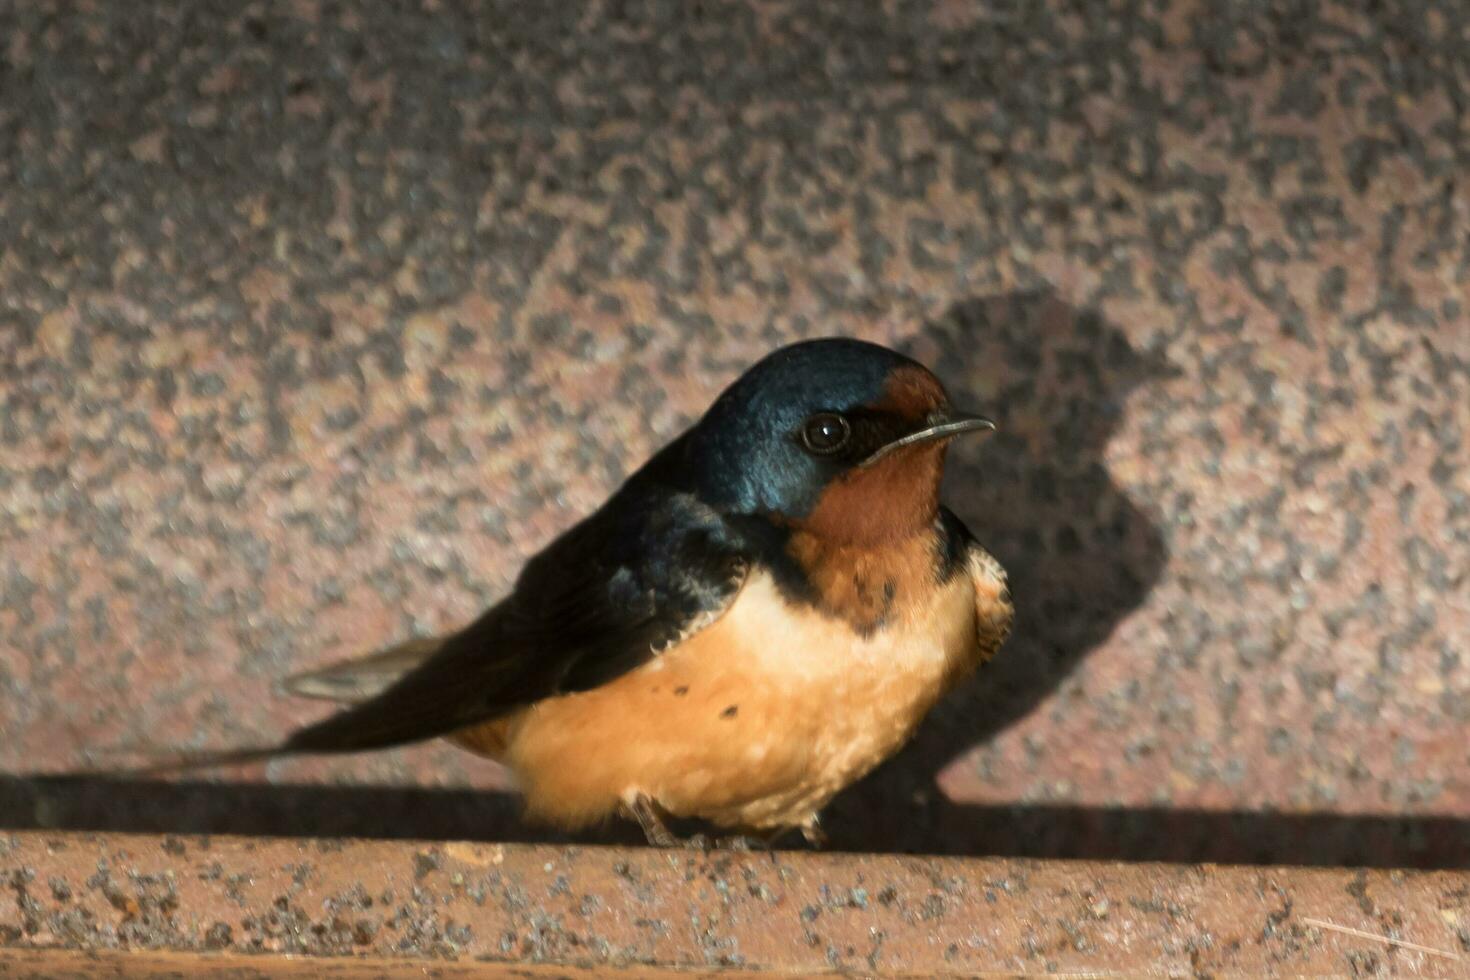 Barn Swallow Bird photo